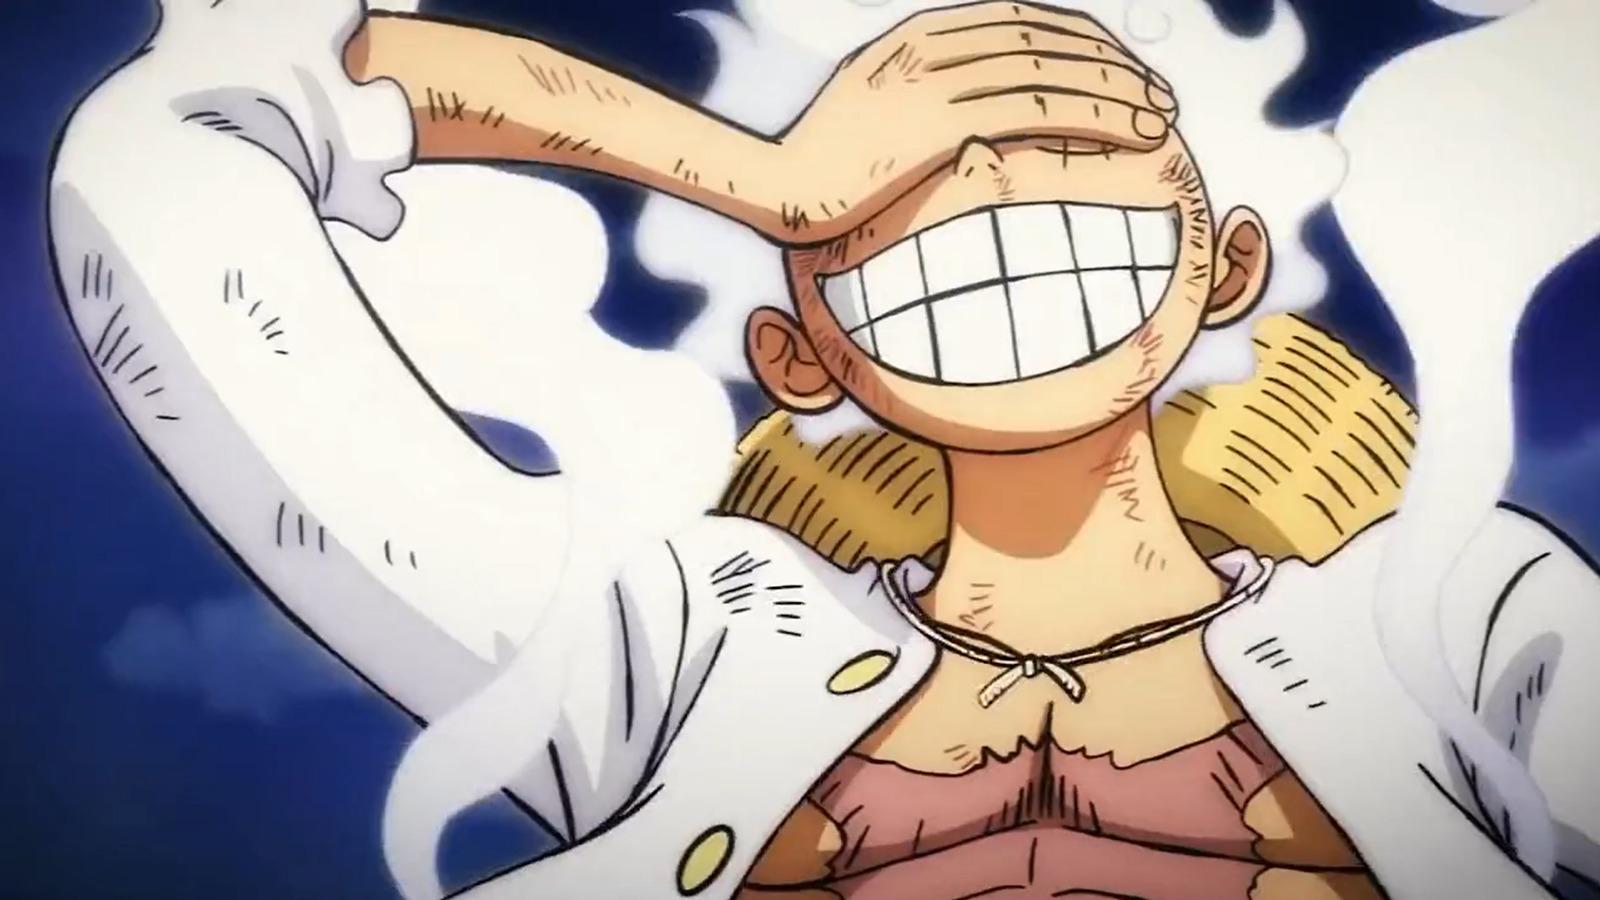 One Piece Episode 1072 spoilers gear 5 debut